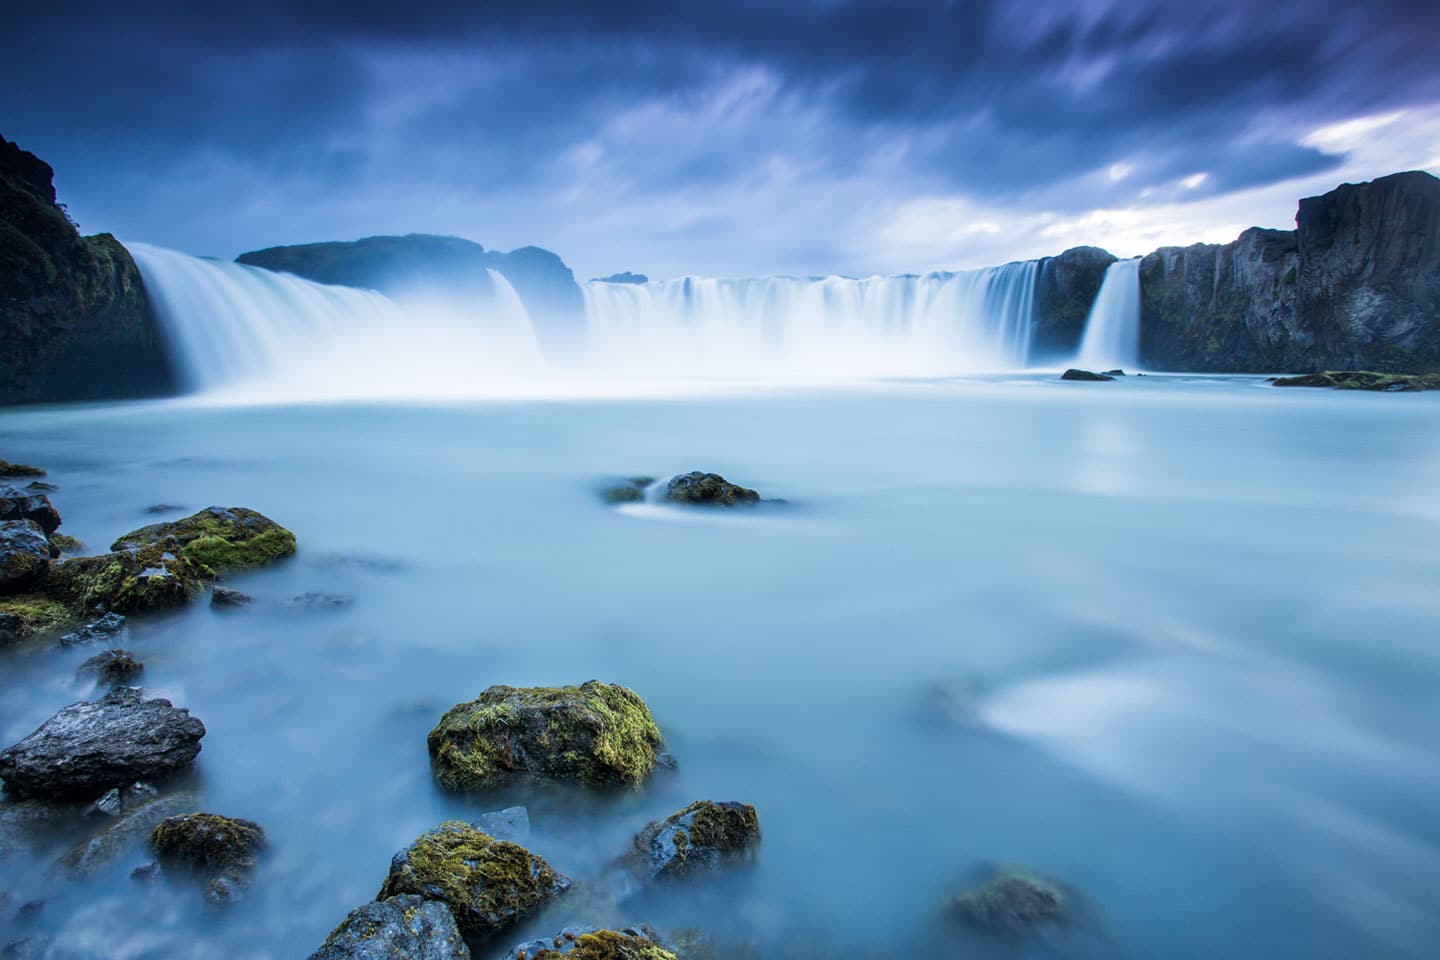 The impressive Godafoss waterfalls in Iceland